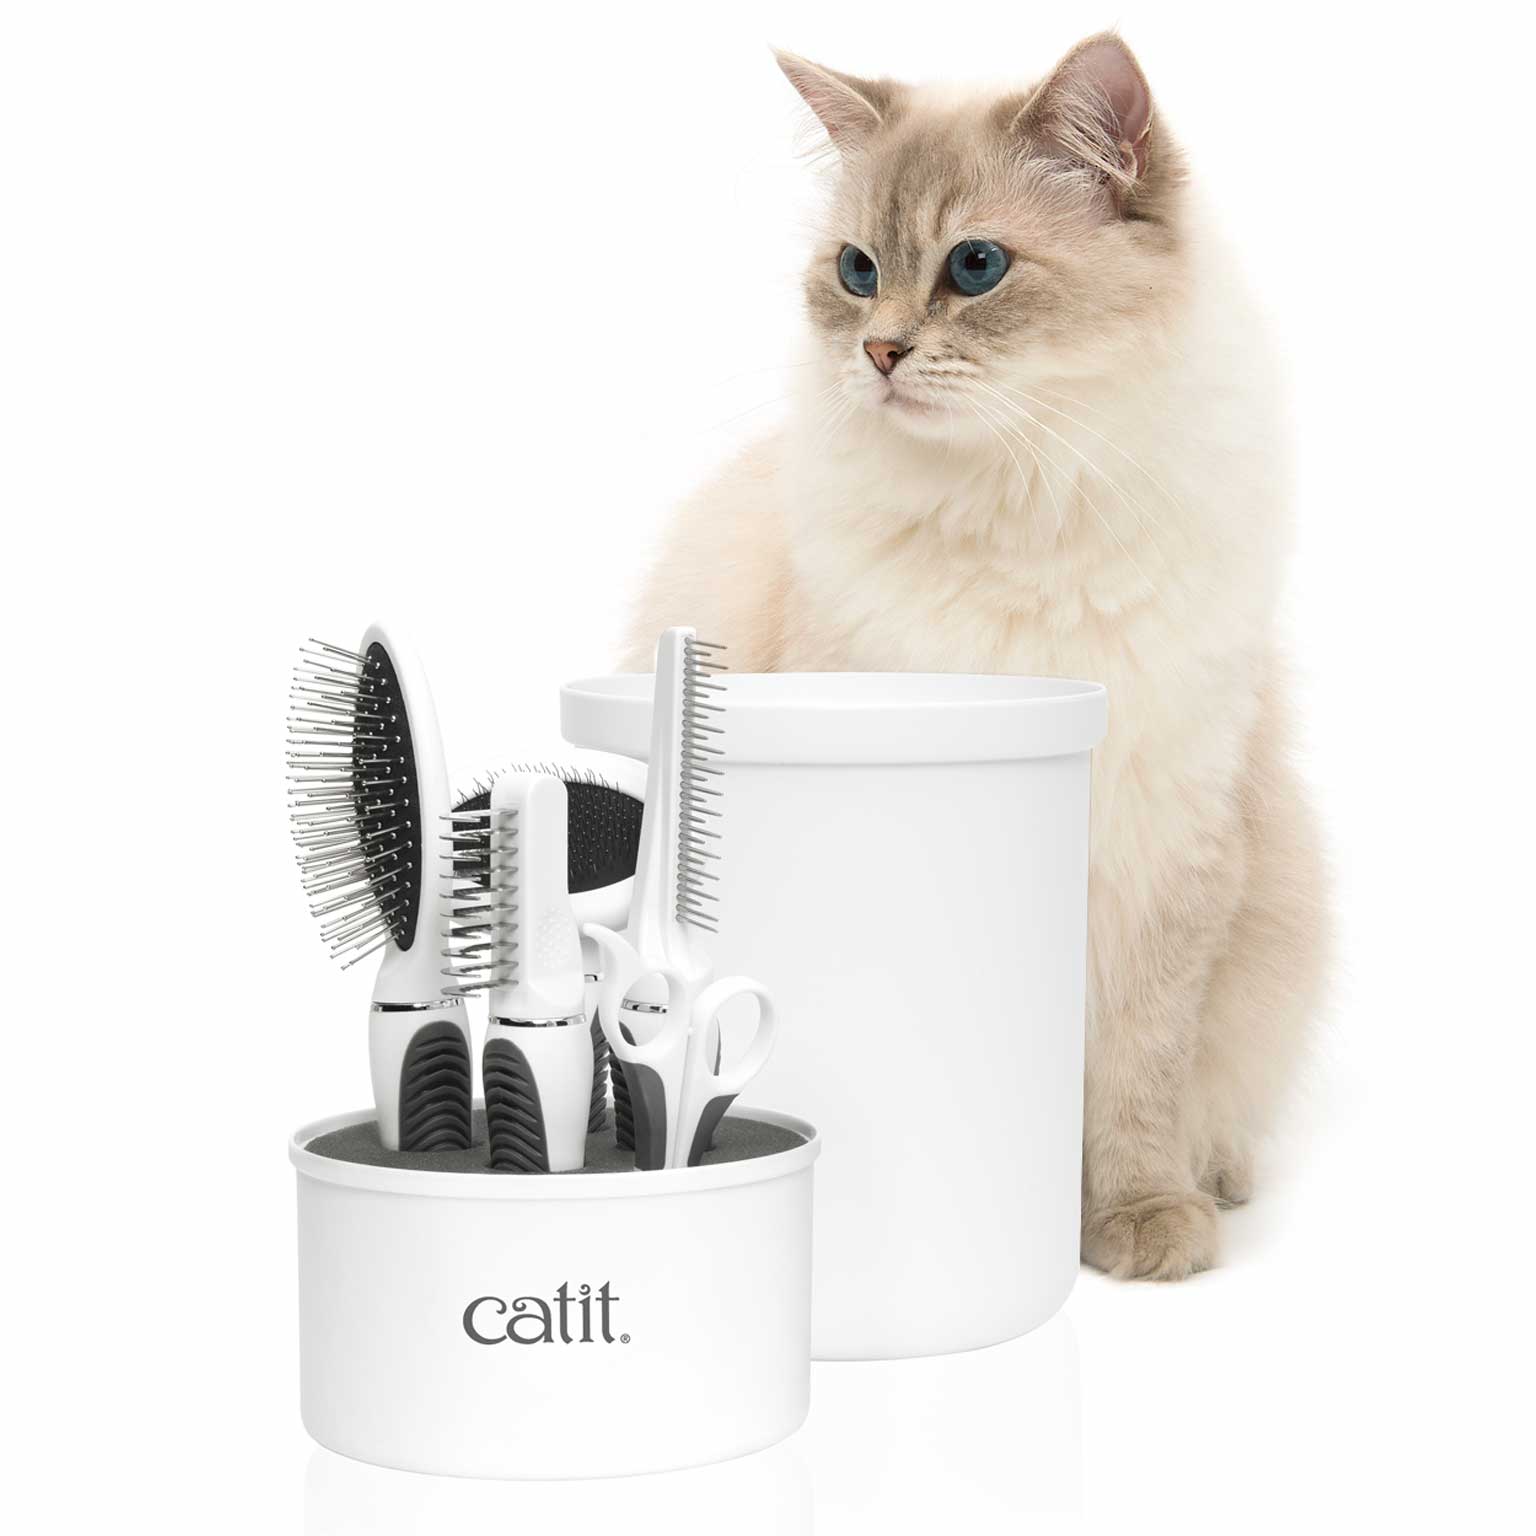 Catit Longhair Grooming Kit - Products